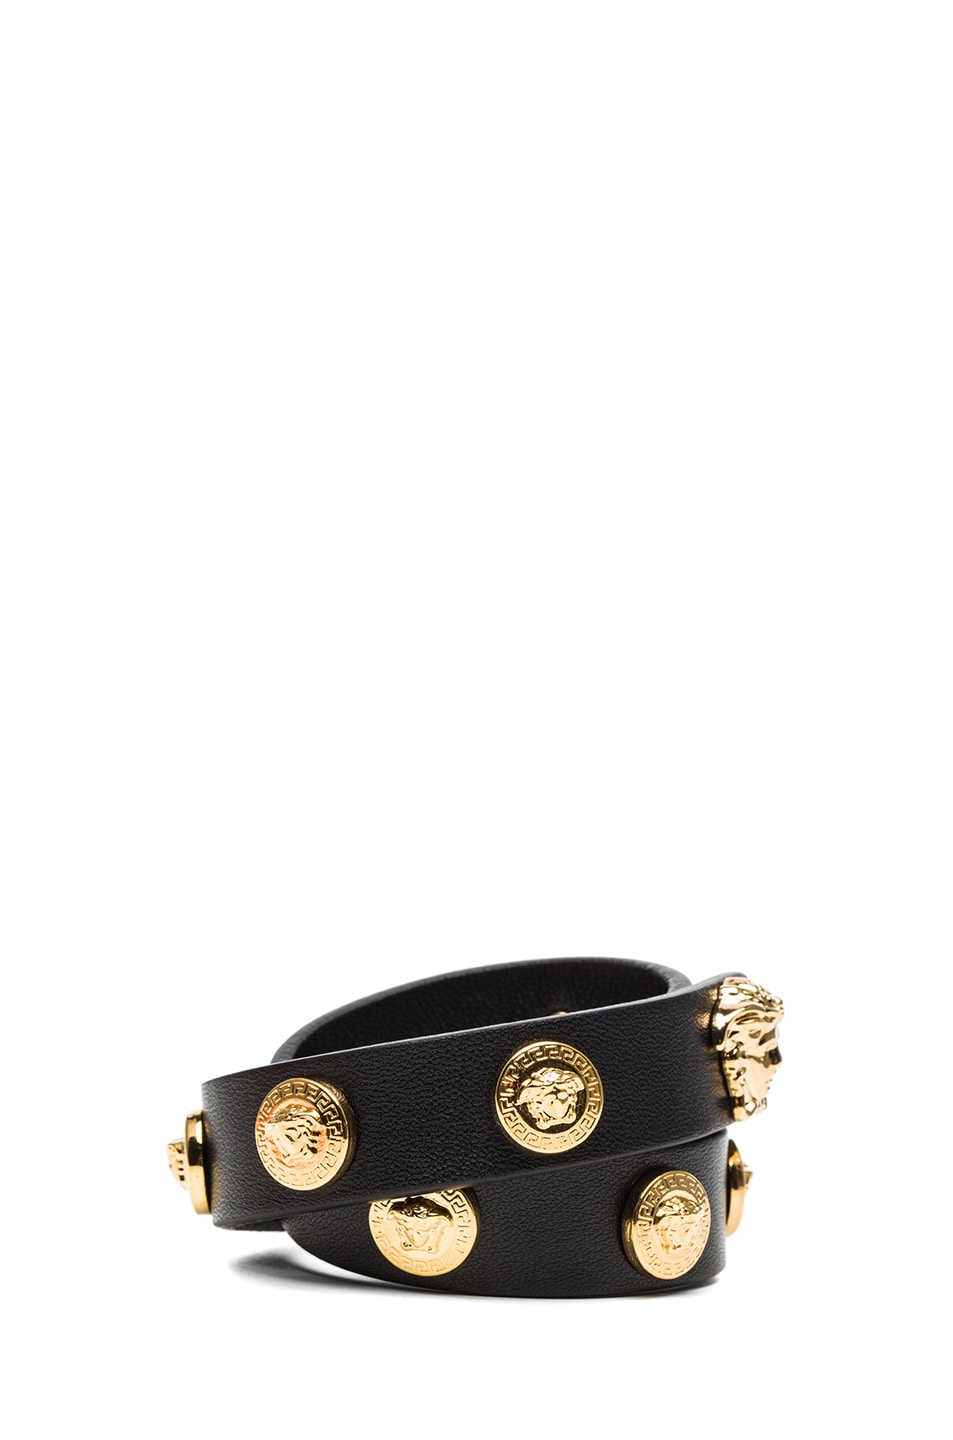 VERSACE Leather Bracelet in Black & Gold | FWRD